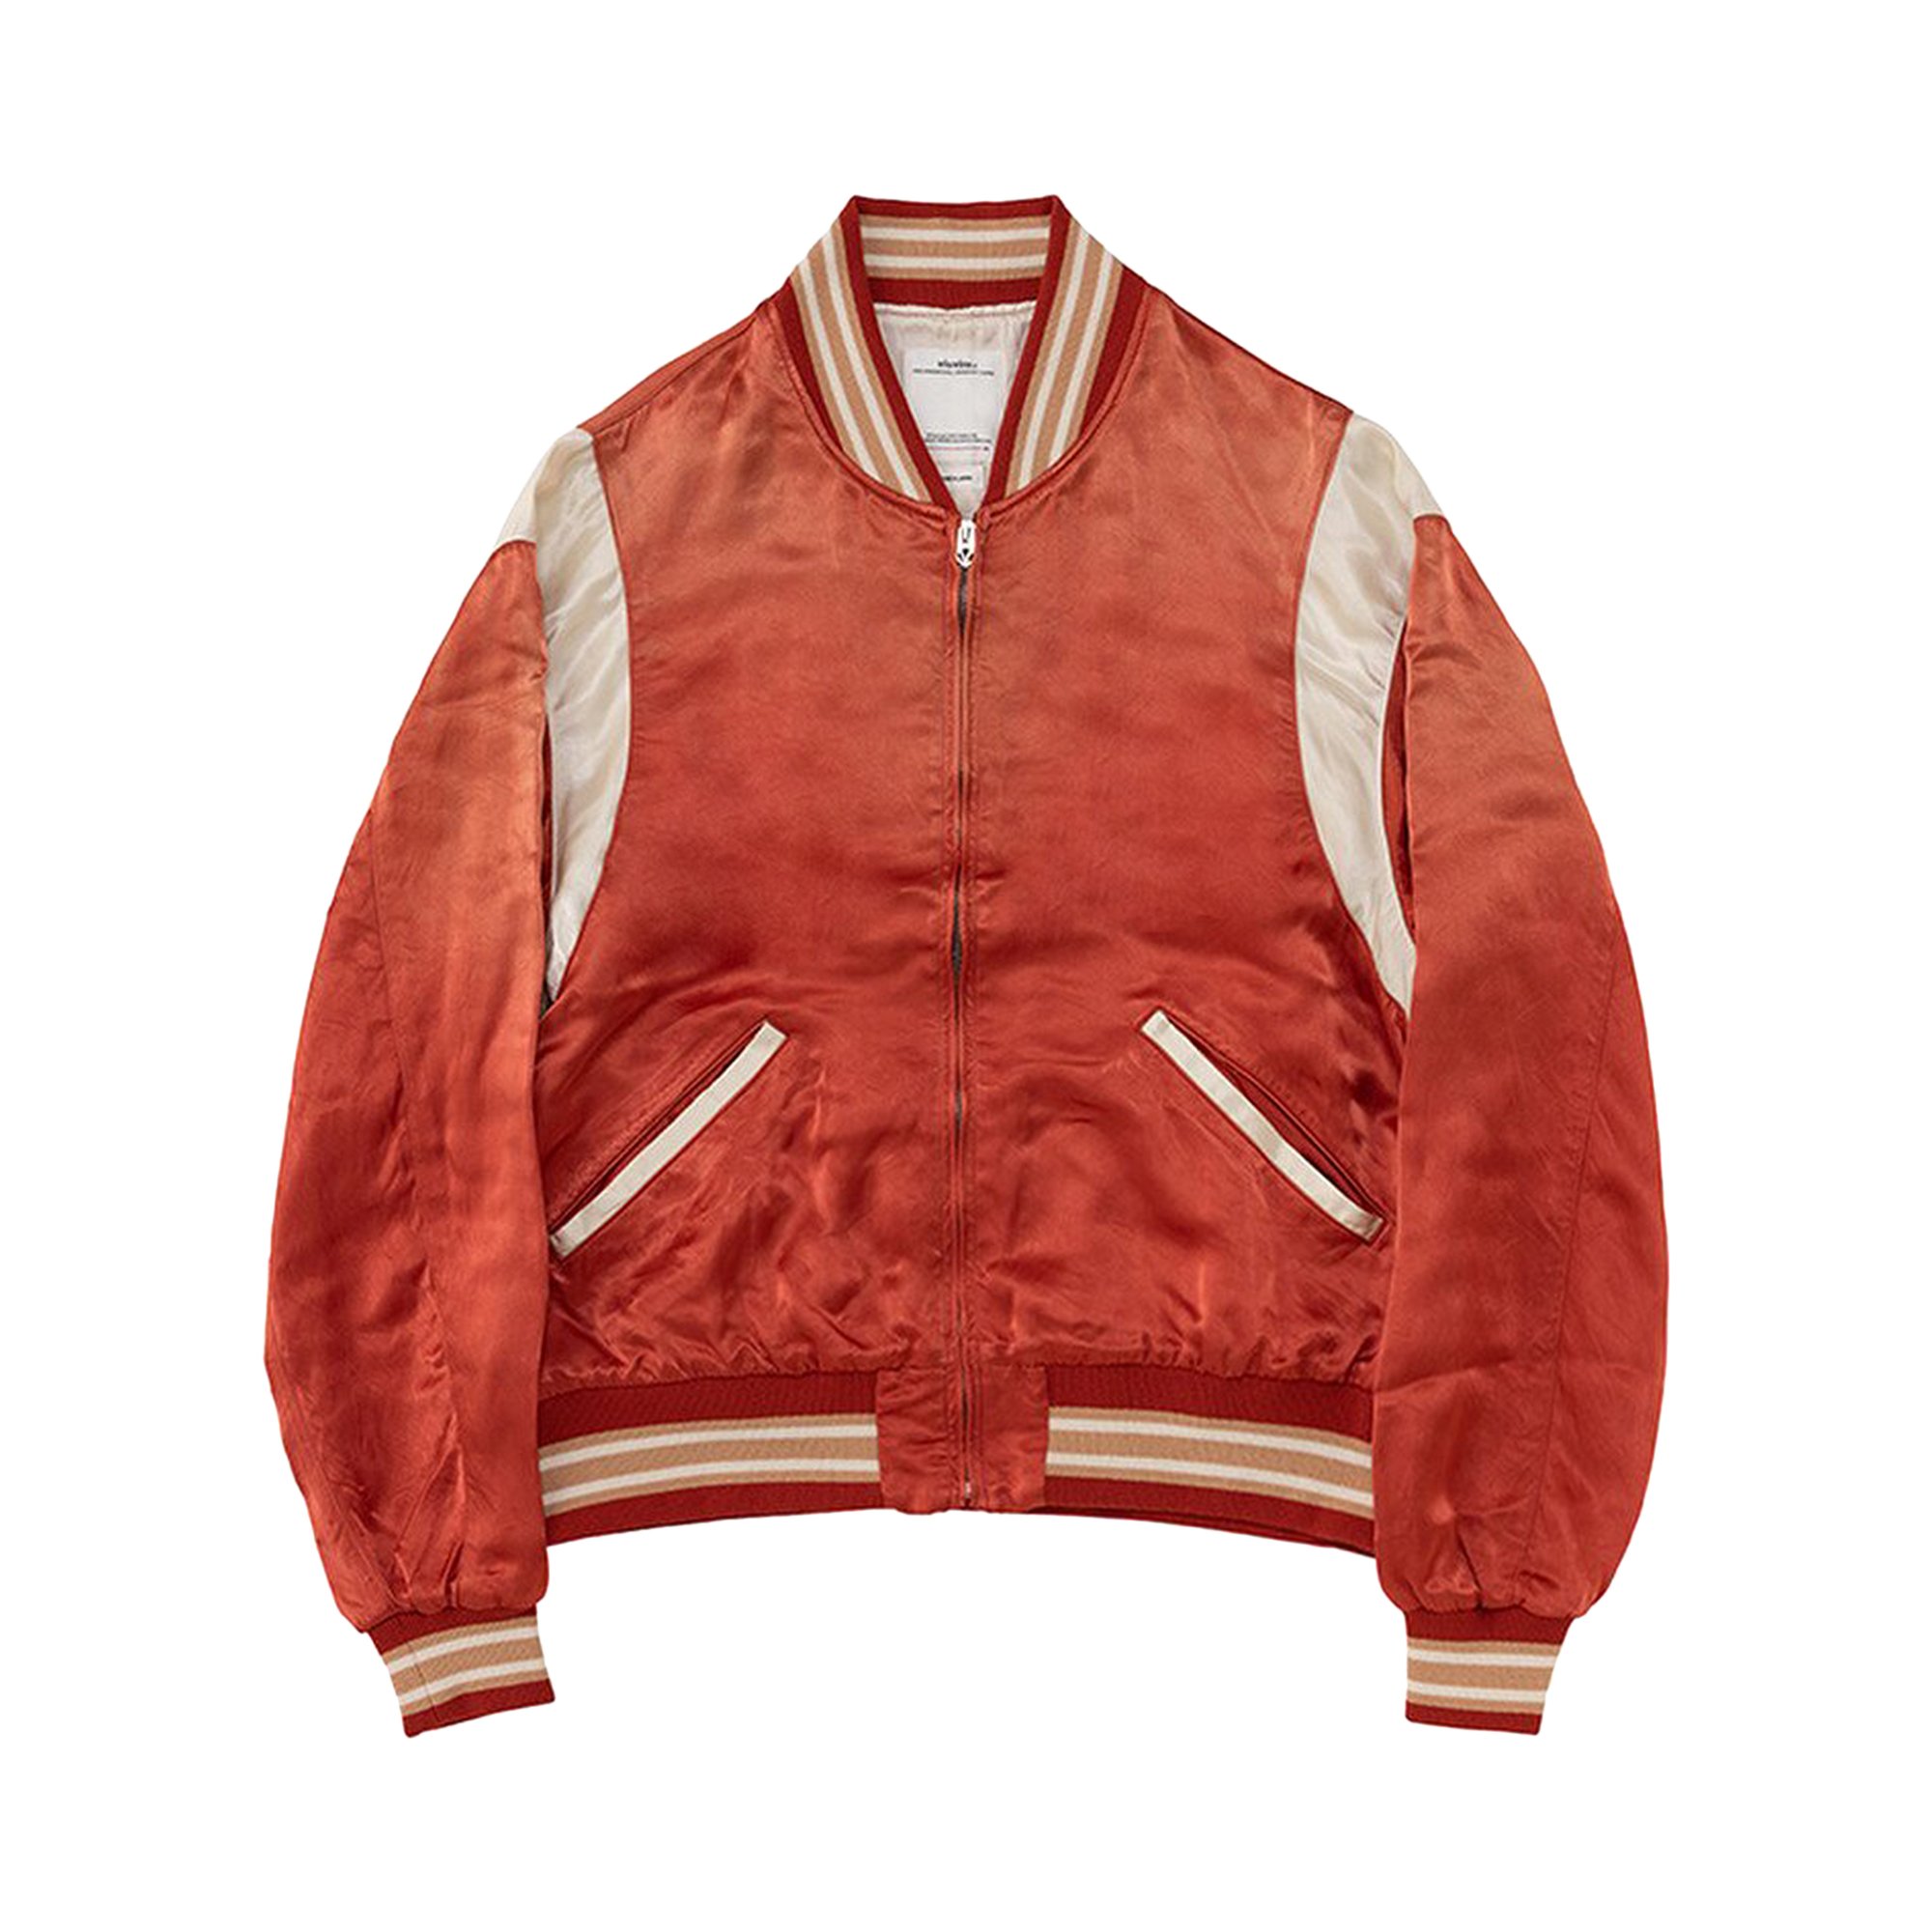 Buy Visvim Douglas Stadium Jacket 'Red' - 123105013018 RED | GOAT